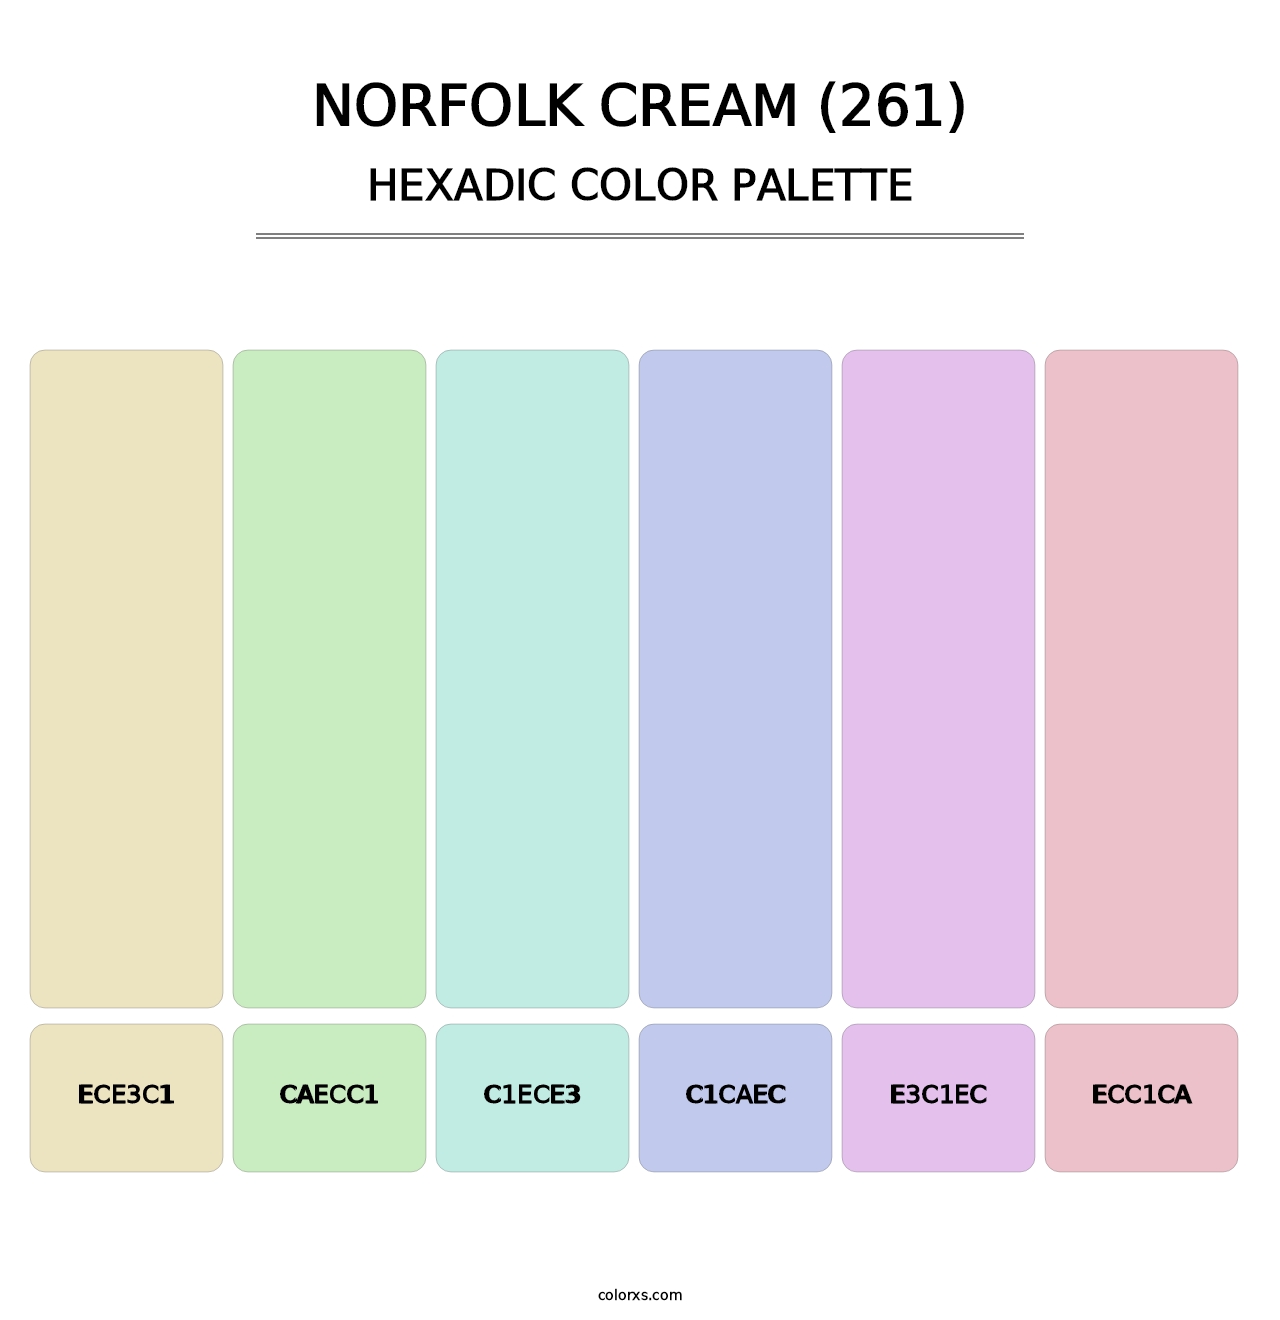 Norfolk Cream (261) - Hexadic Color Palette